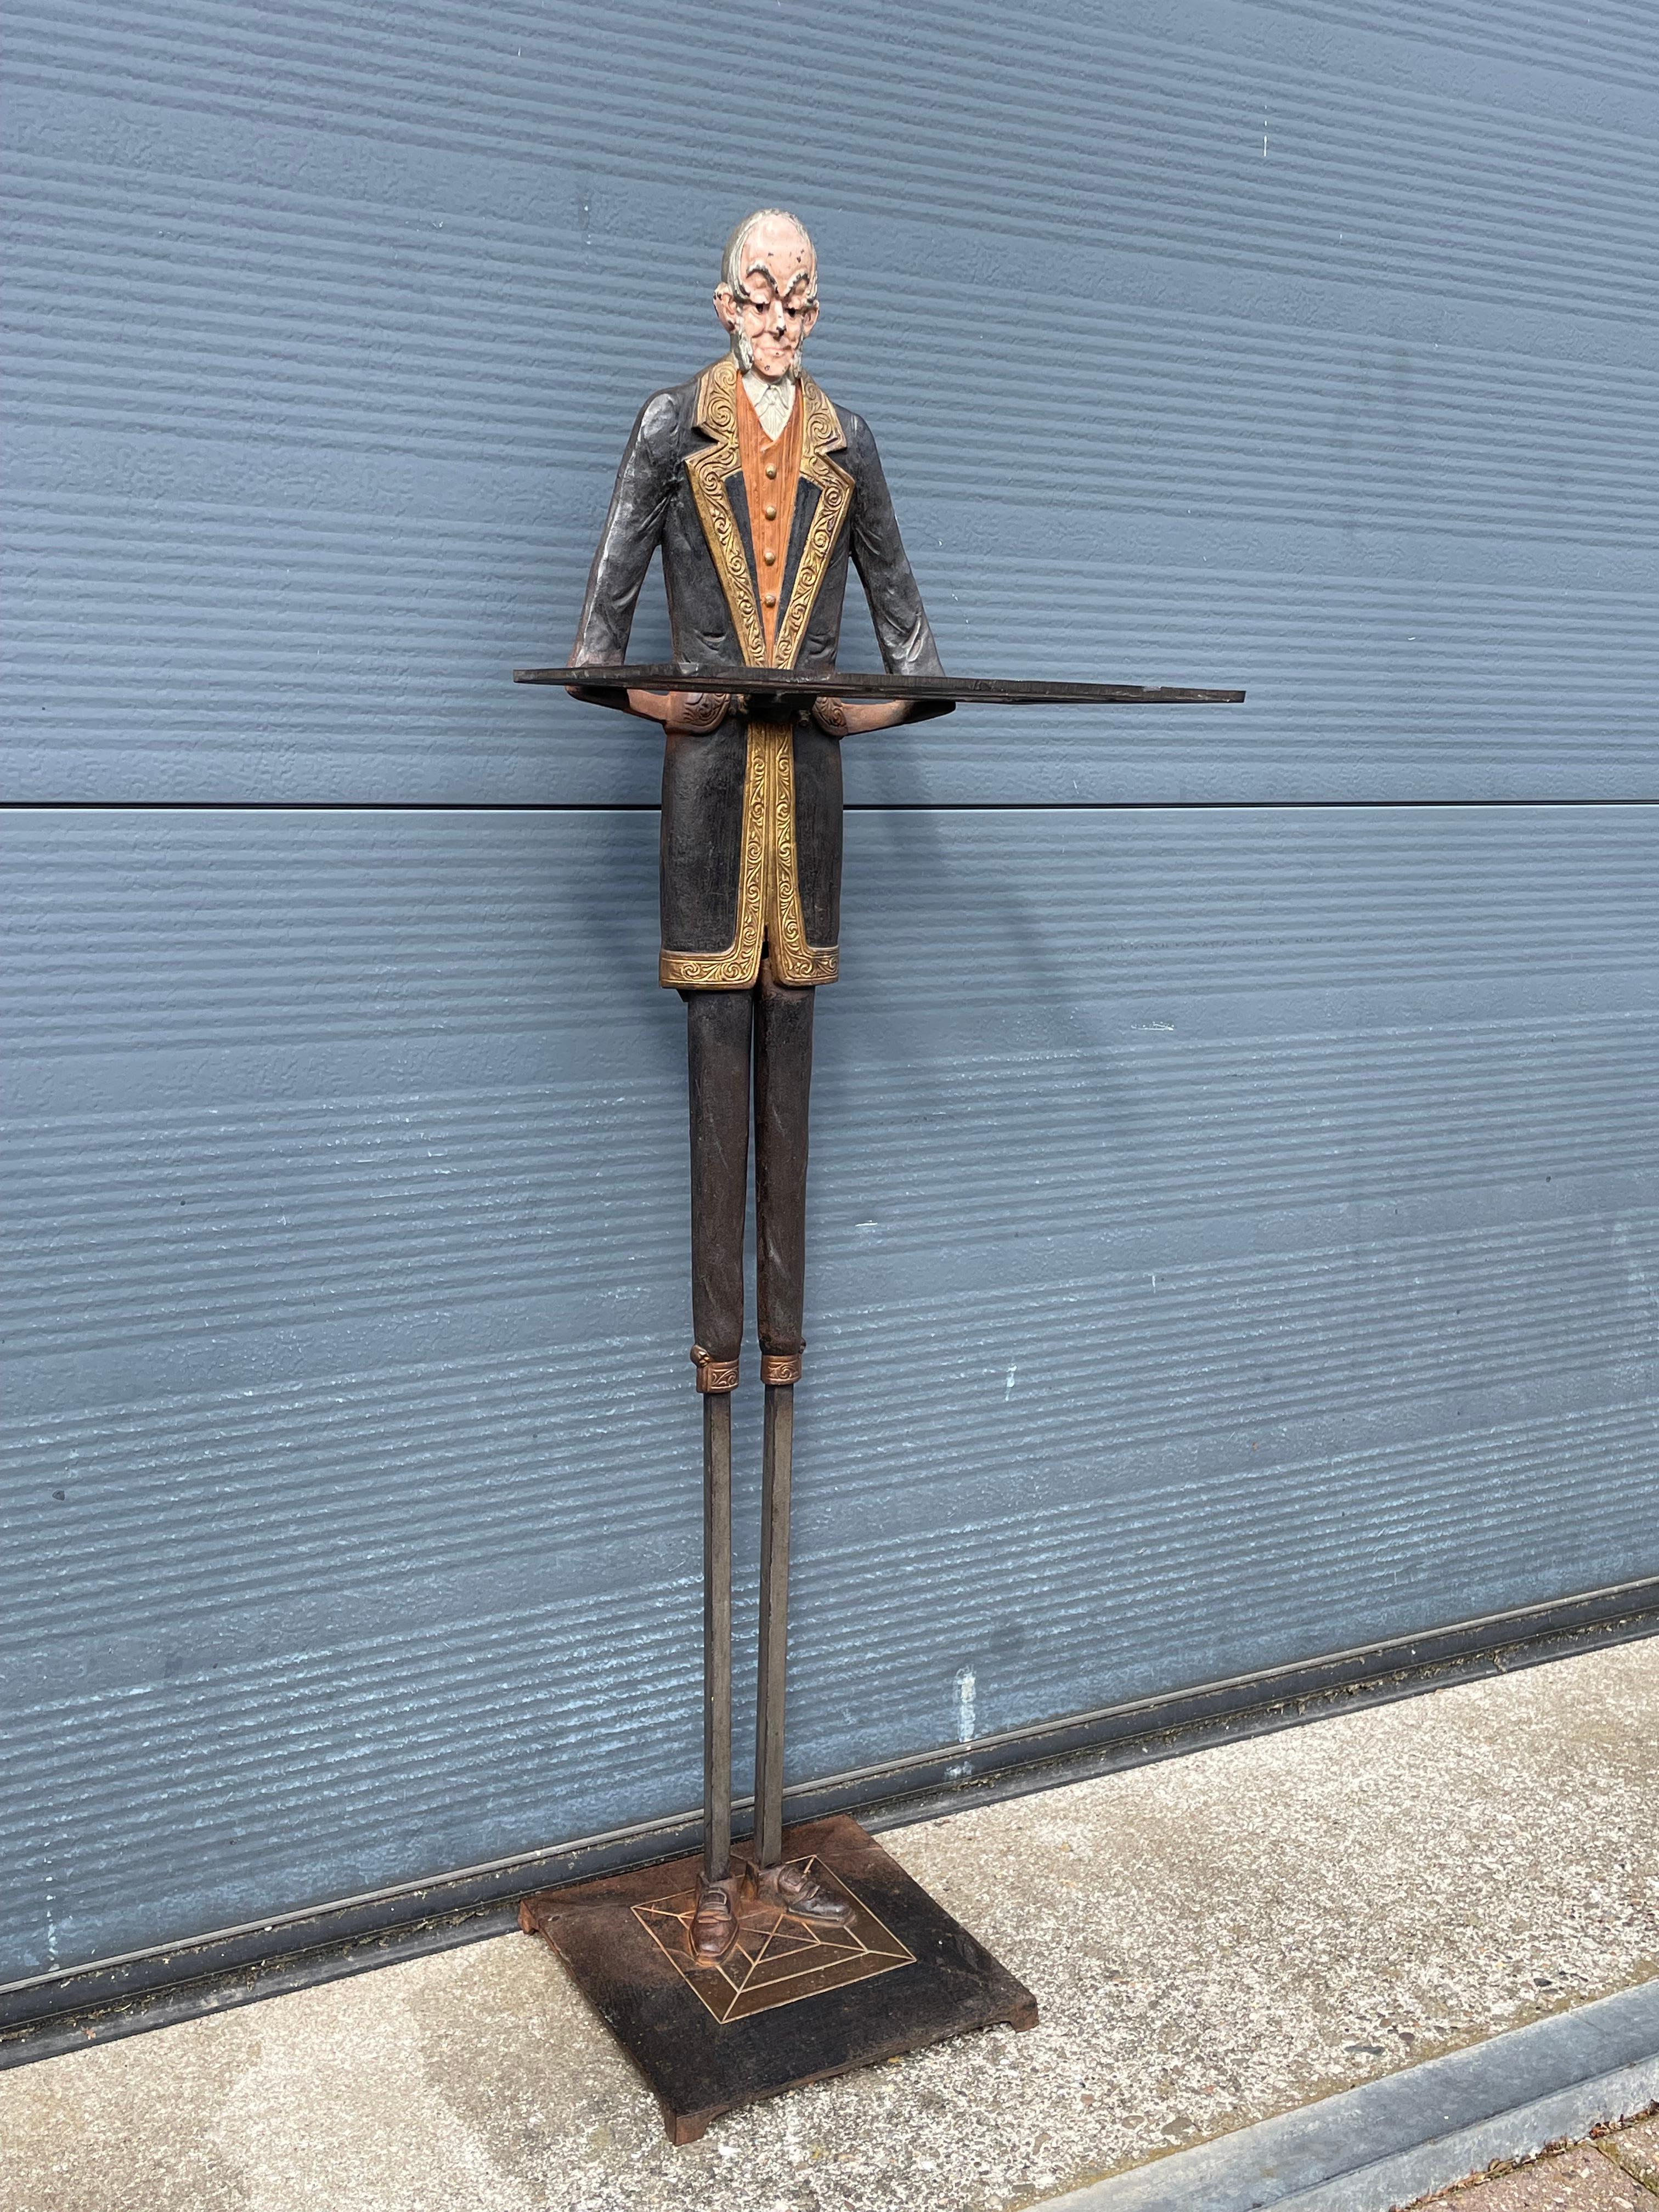 European Art Deco Era, Cast Iron Tray or Umbrella Stand w. Painted Servant Sculpture 1920 For Sale